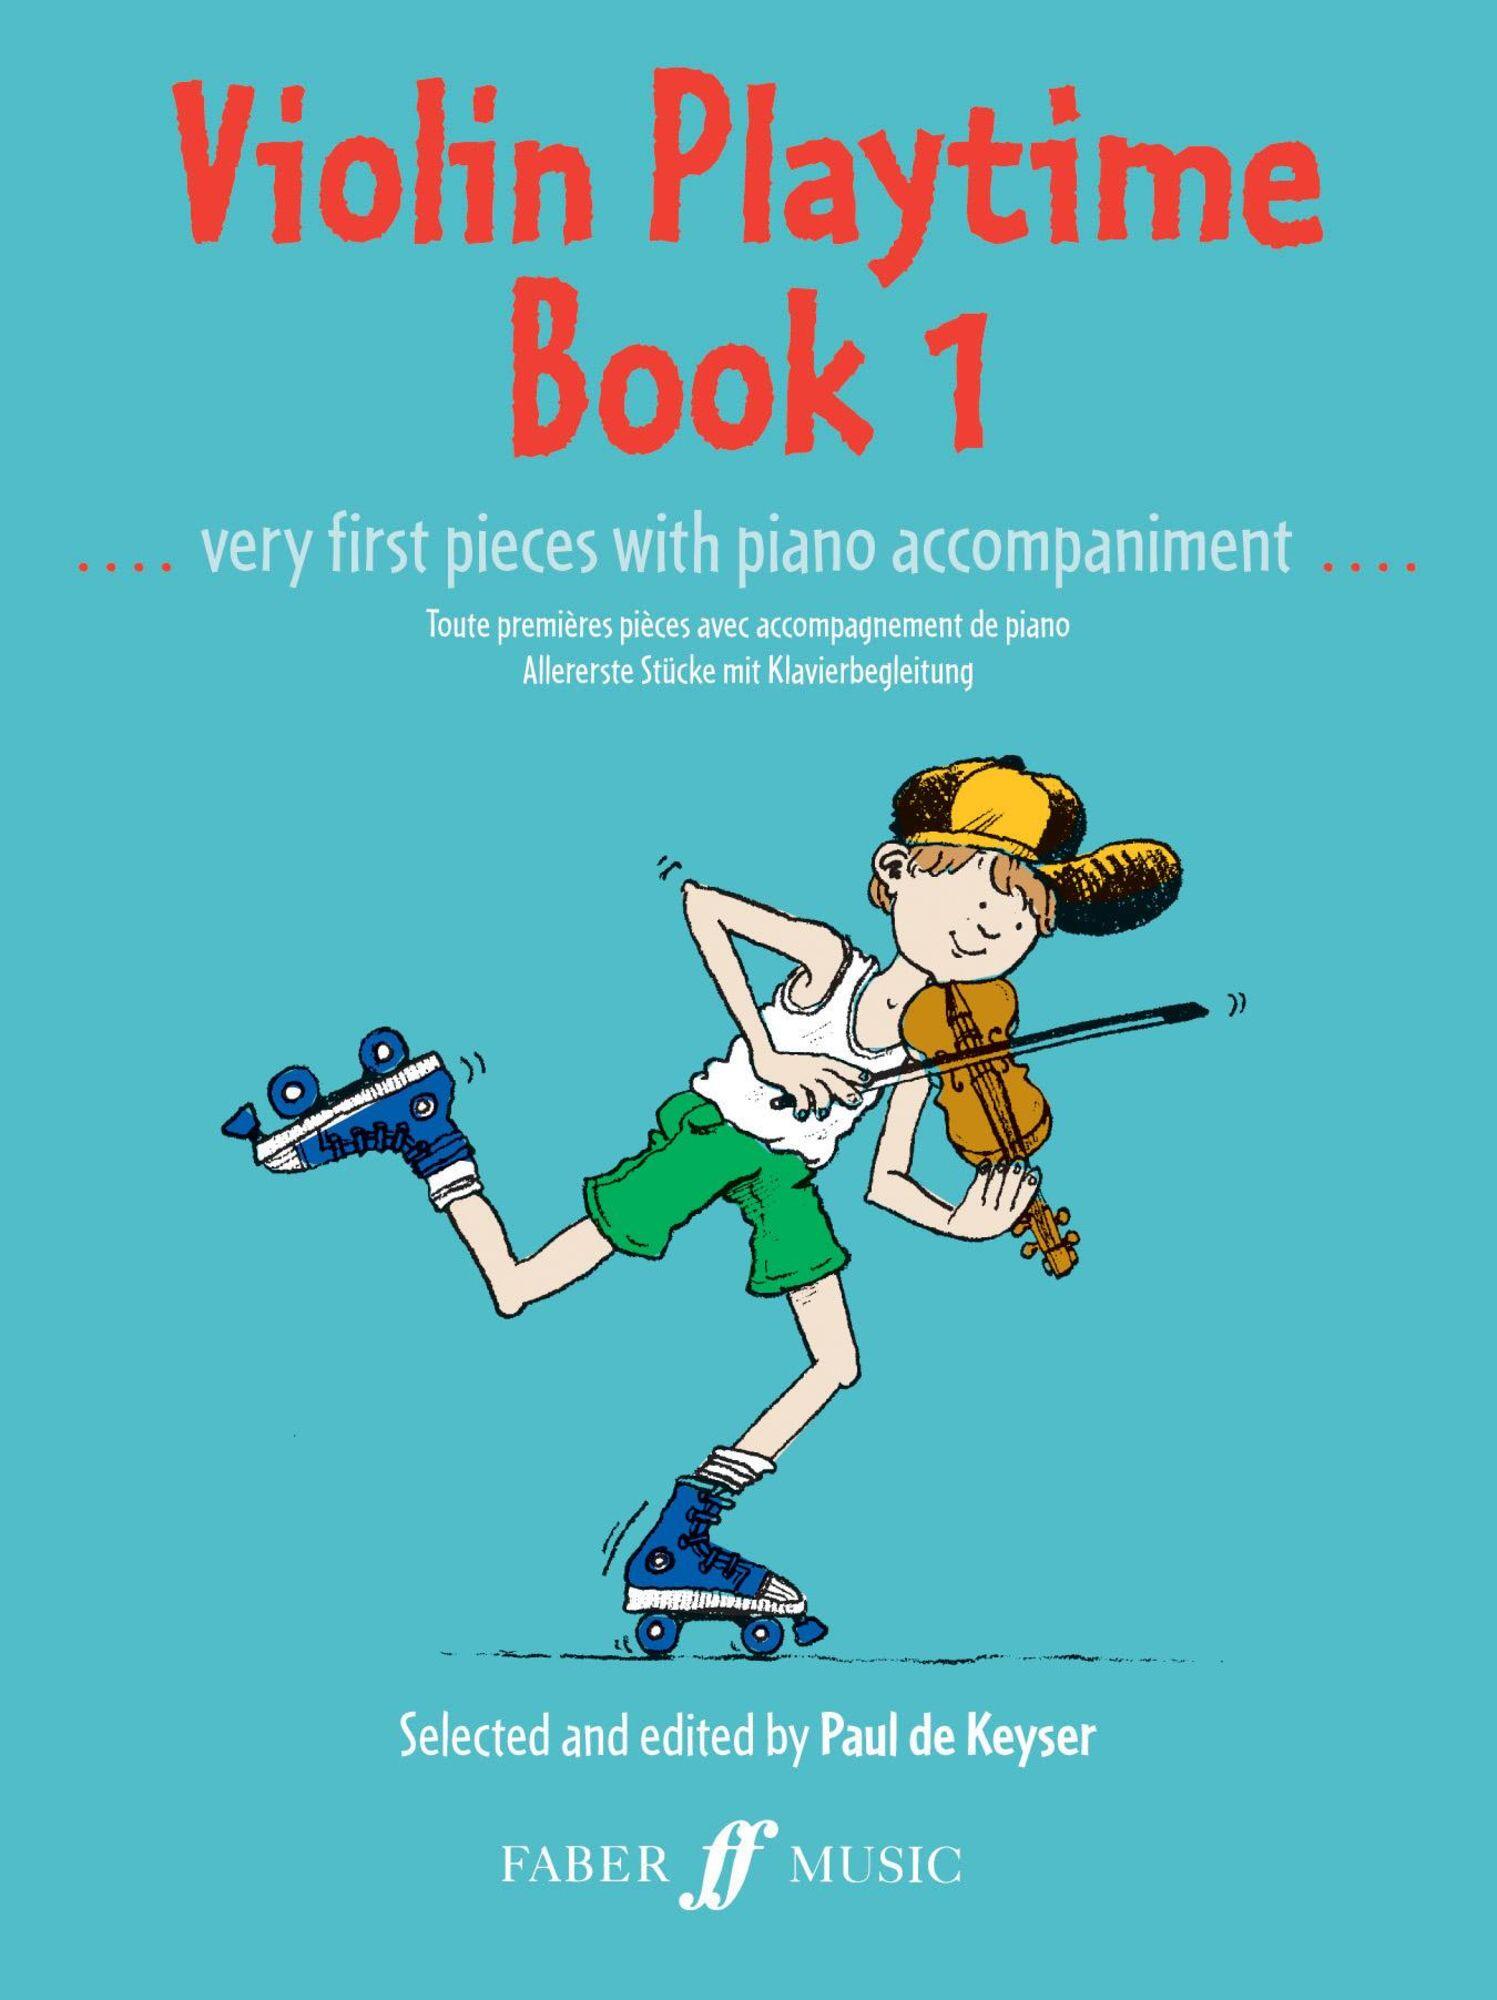 Violin Playtime Book 1 : photo 1